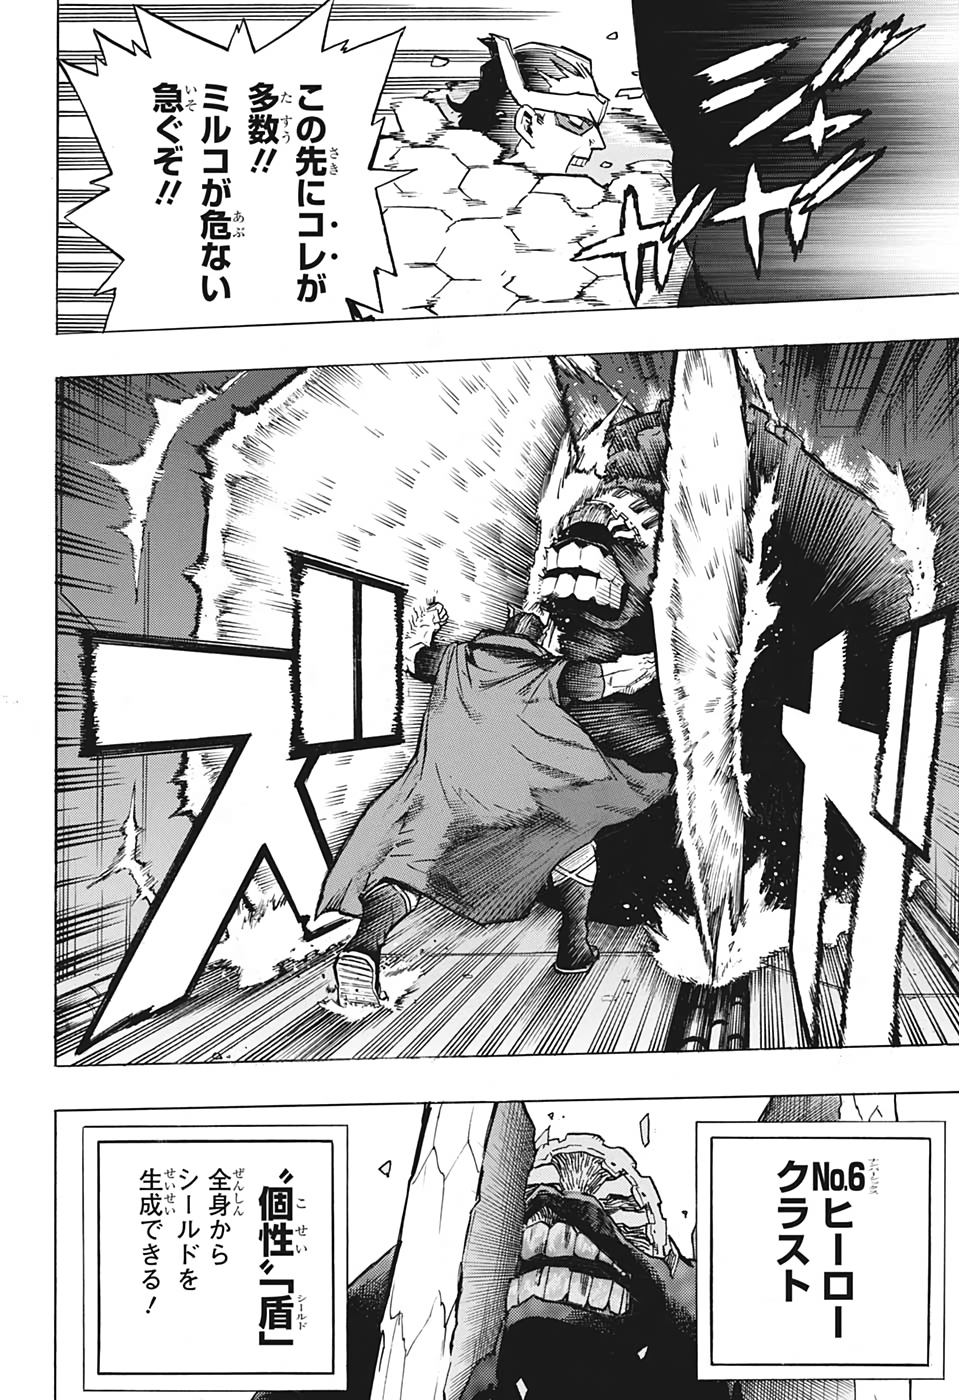 Boku no Hero Academia - Chapter 262 - Page 2